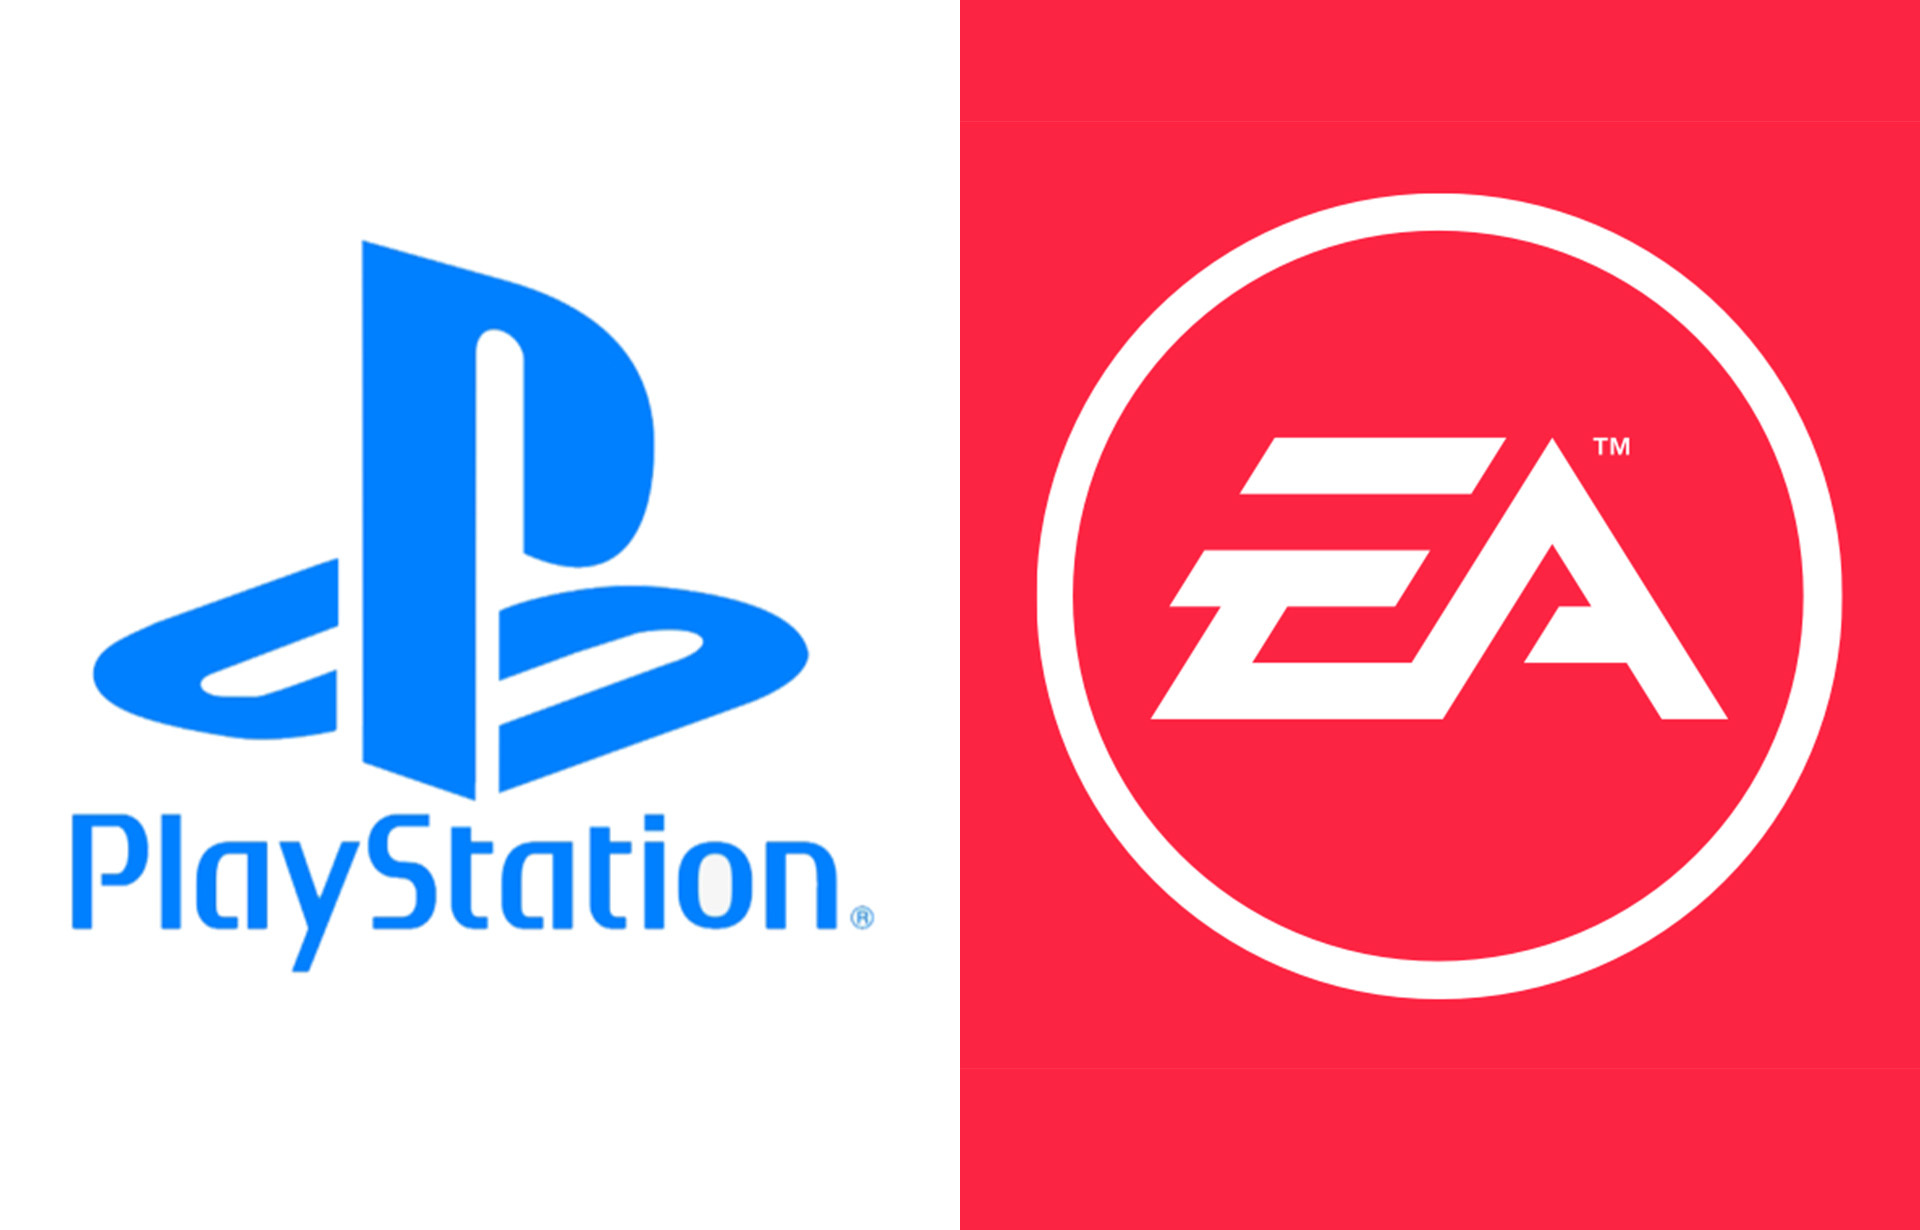 Will Sony Buy EA? |